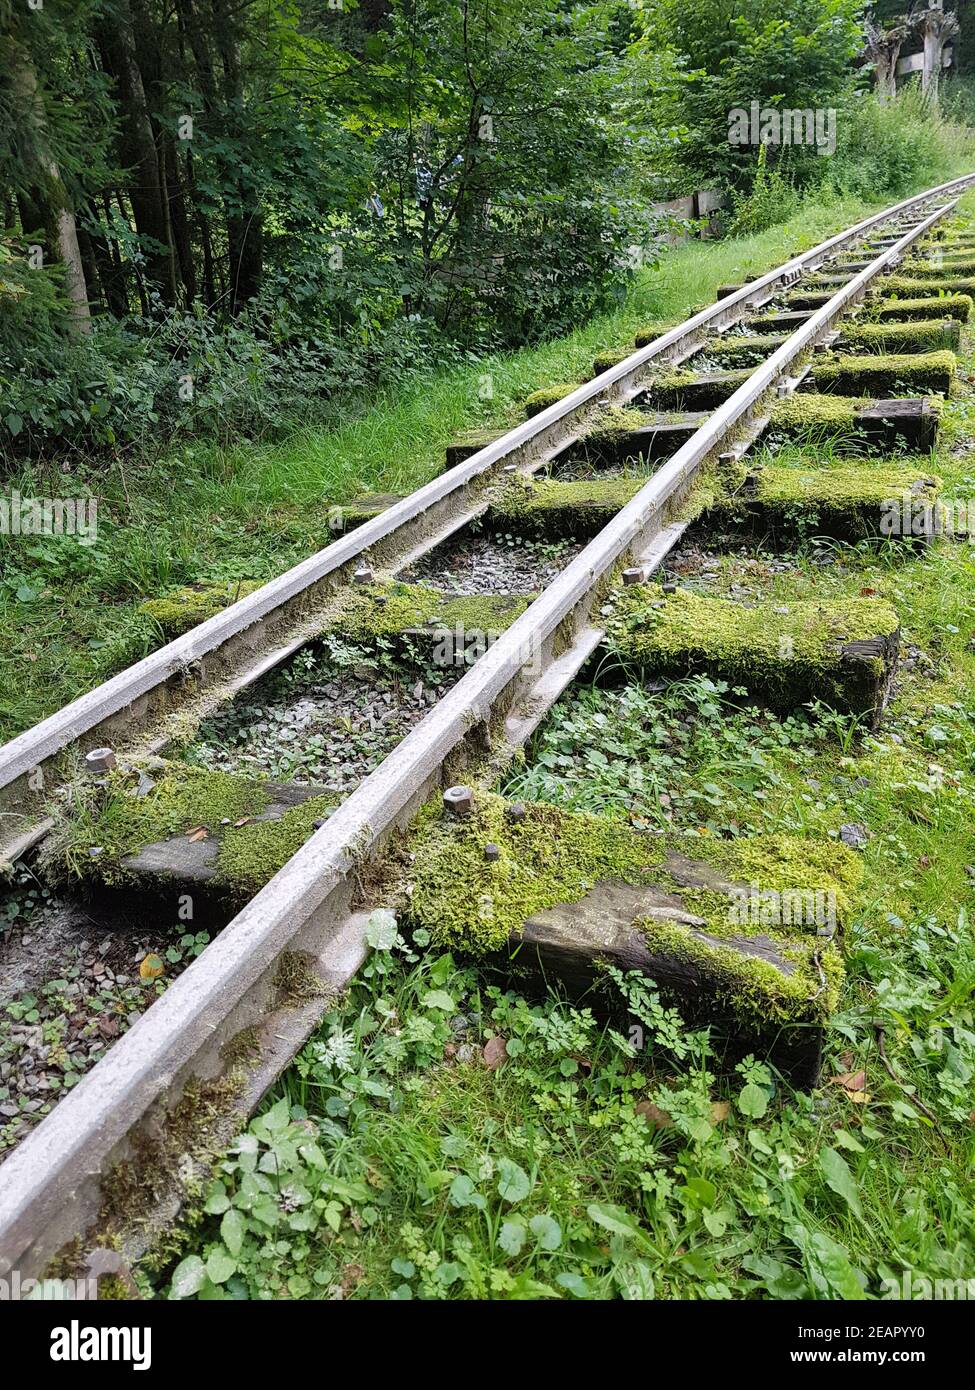 Schienen, Moorbahn, Schmalspur, Bad Schwalbach Stock Photo